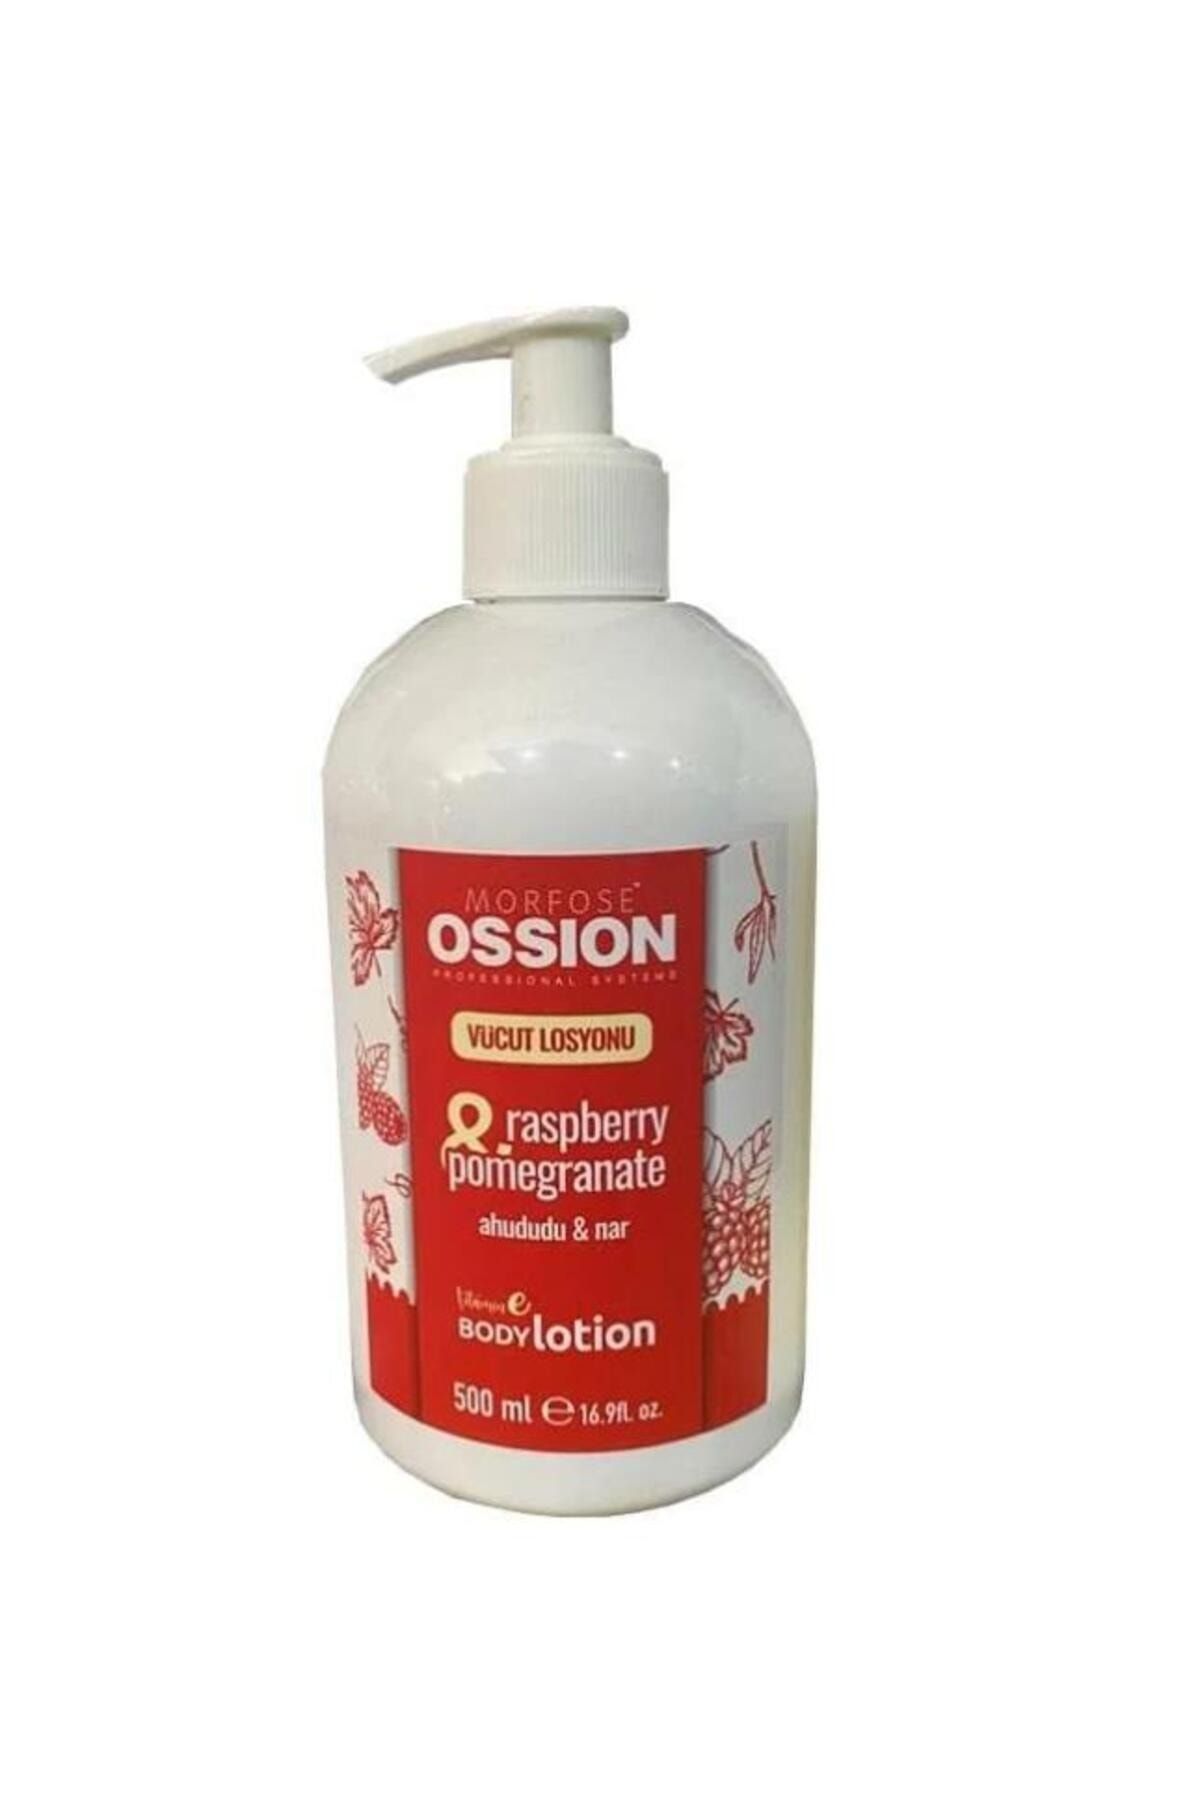 Morfose Ossion El ve Vücut Losyonu Nar 500 ml